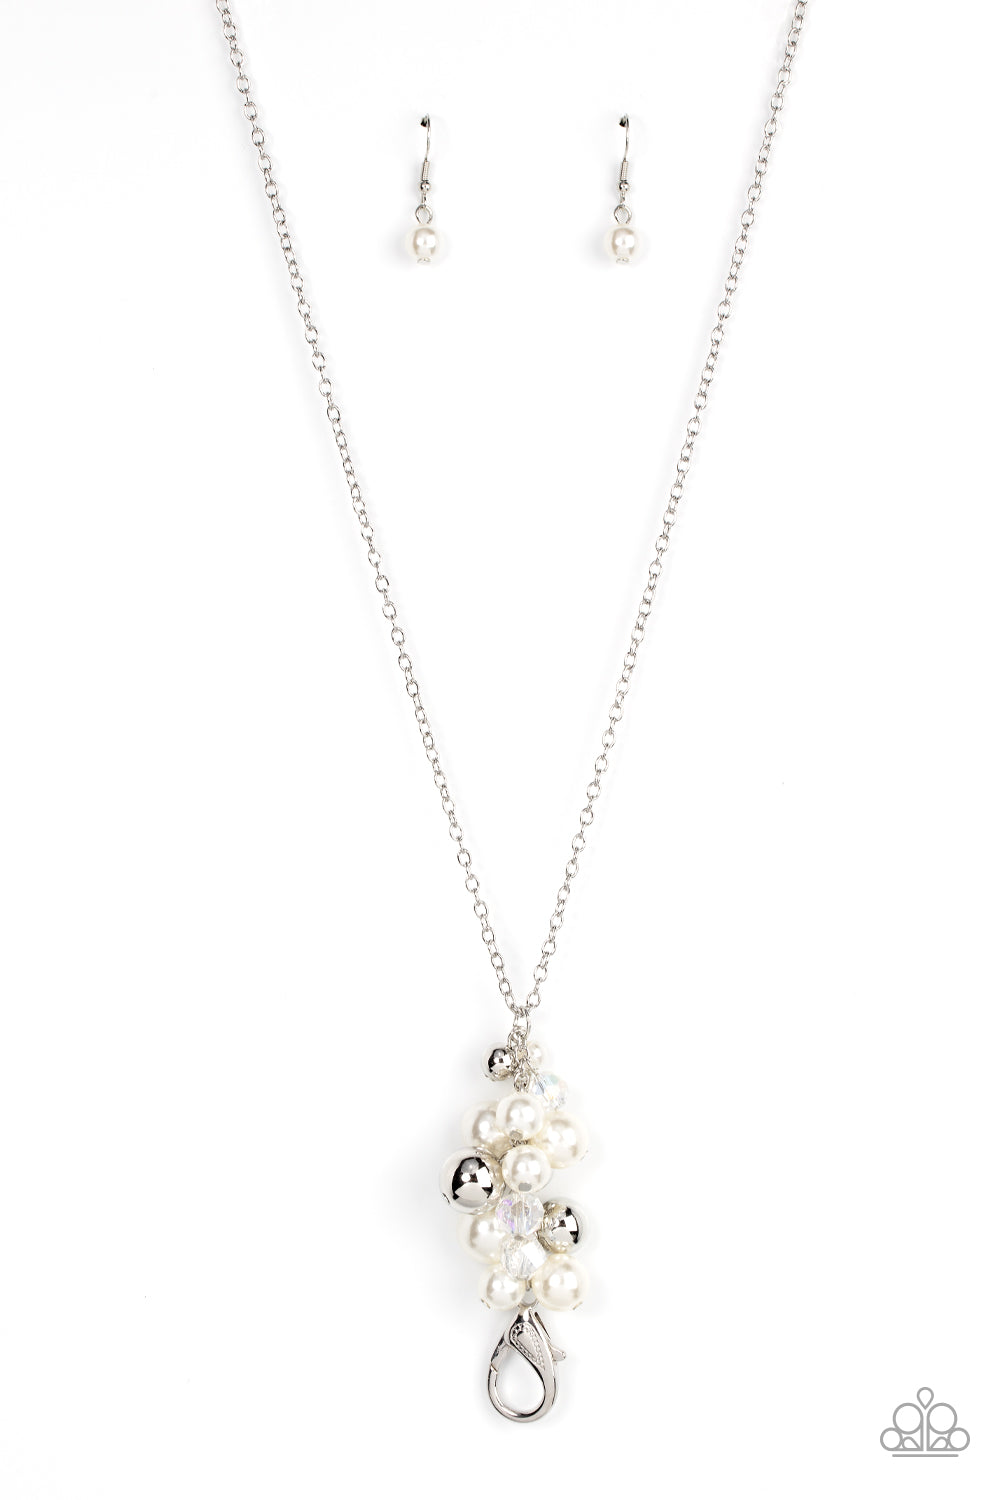 Drip Drop Dazzle - white - Paparazzi LANYARD necklace – JewelryBlingThing